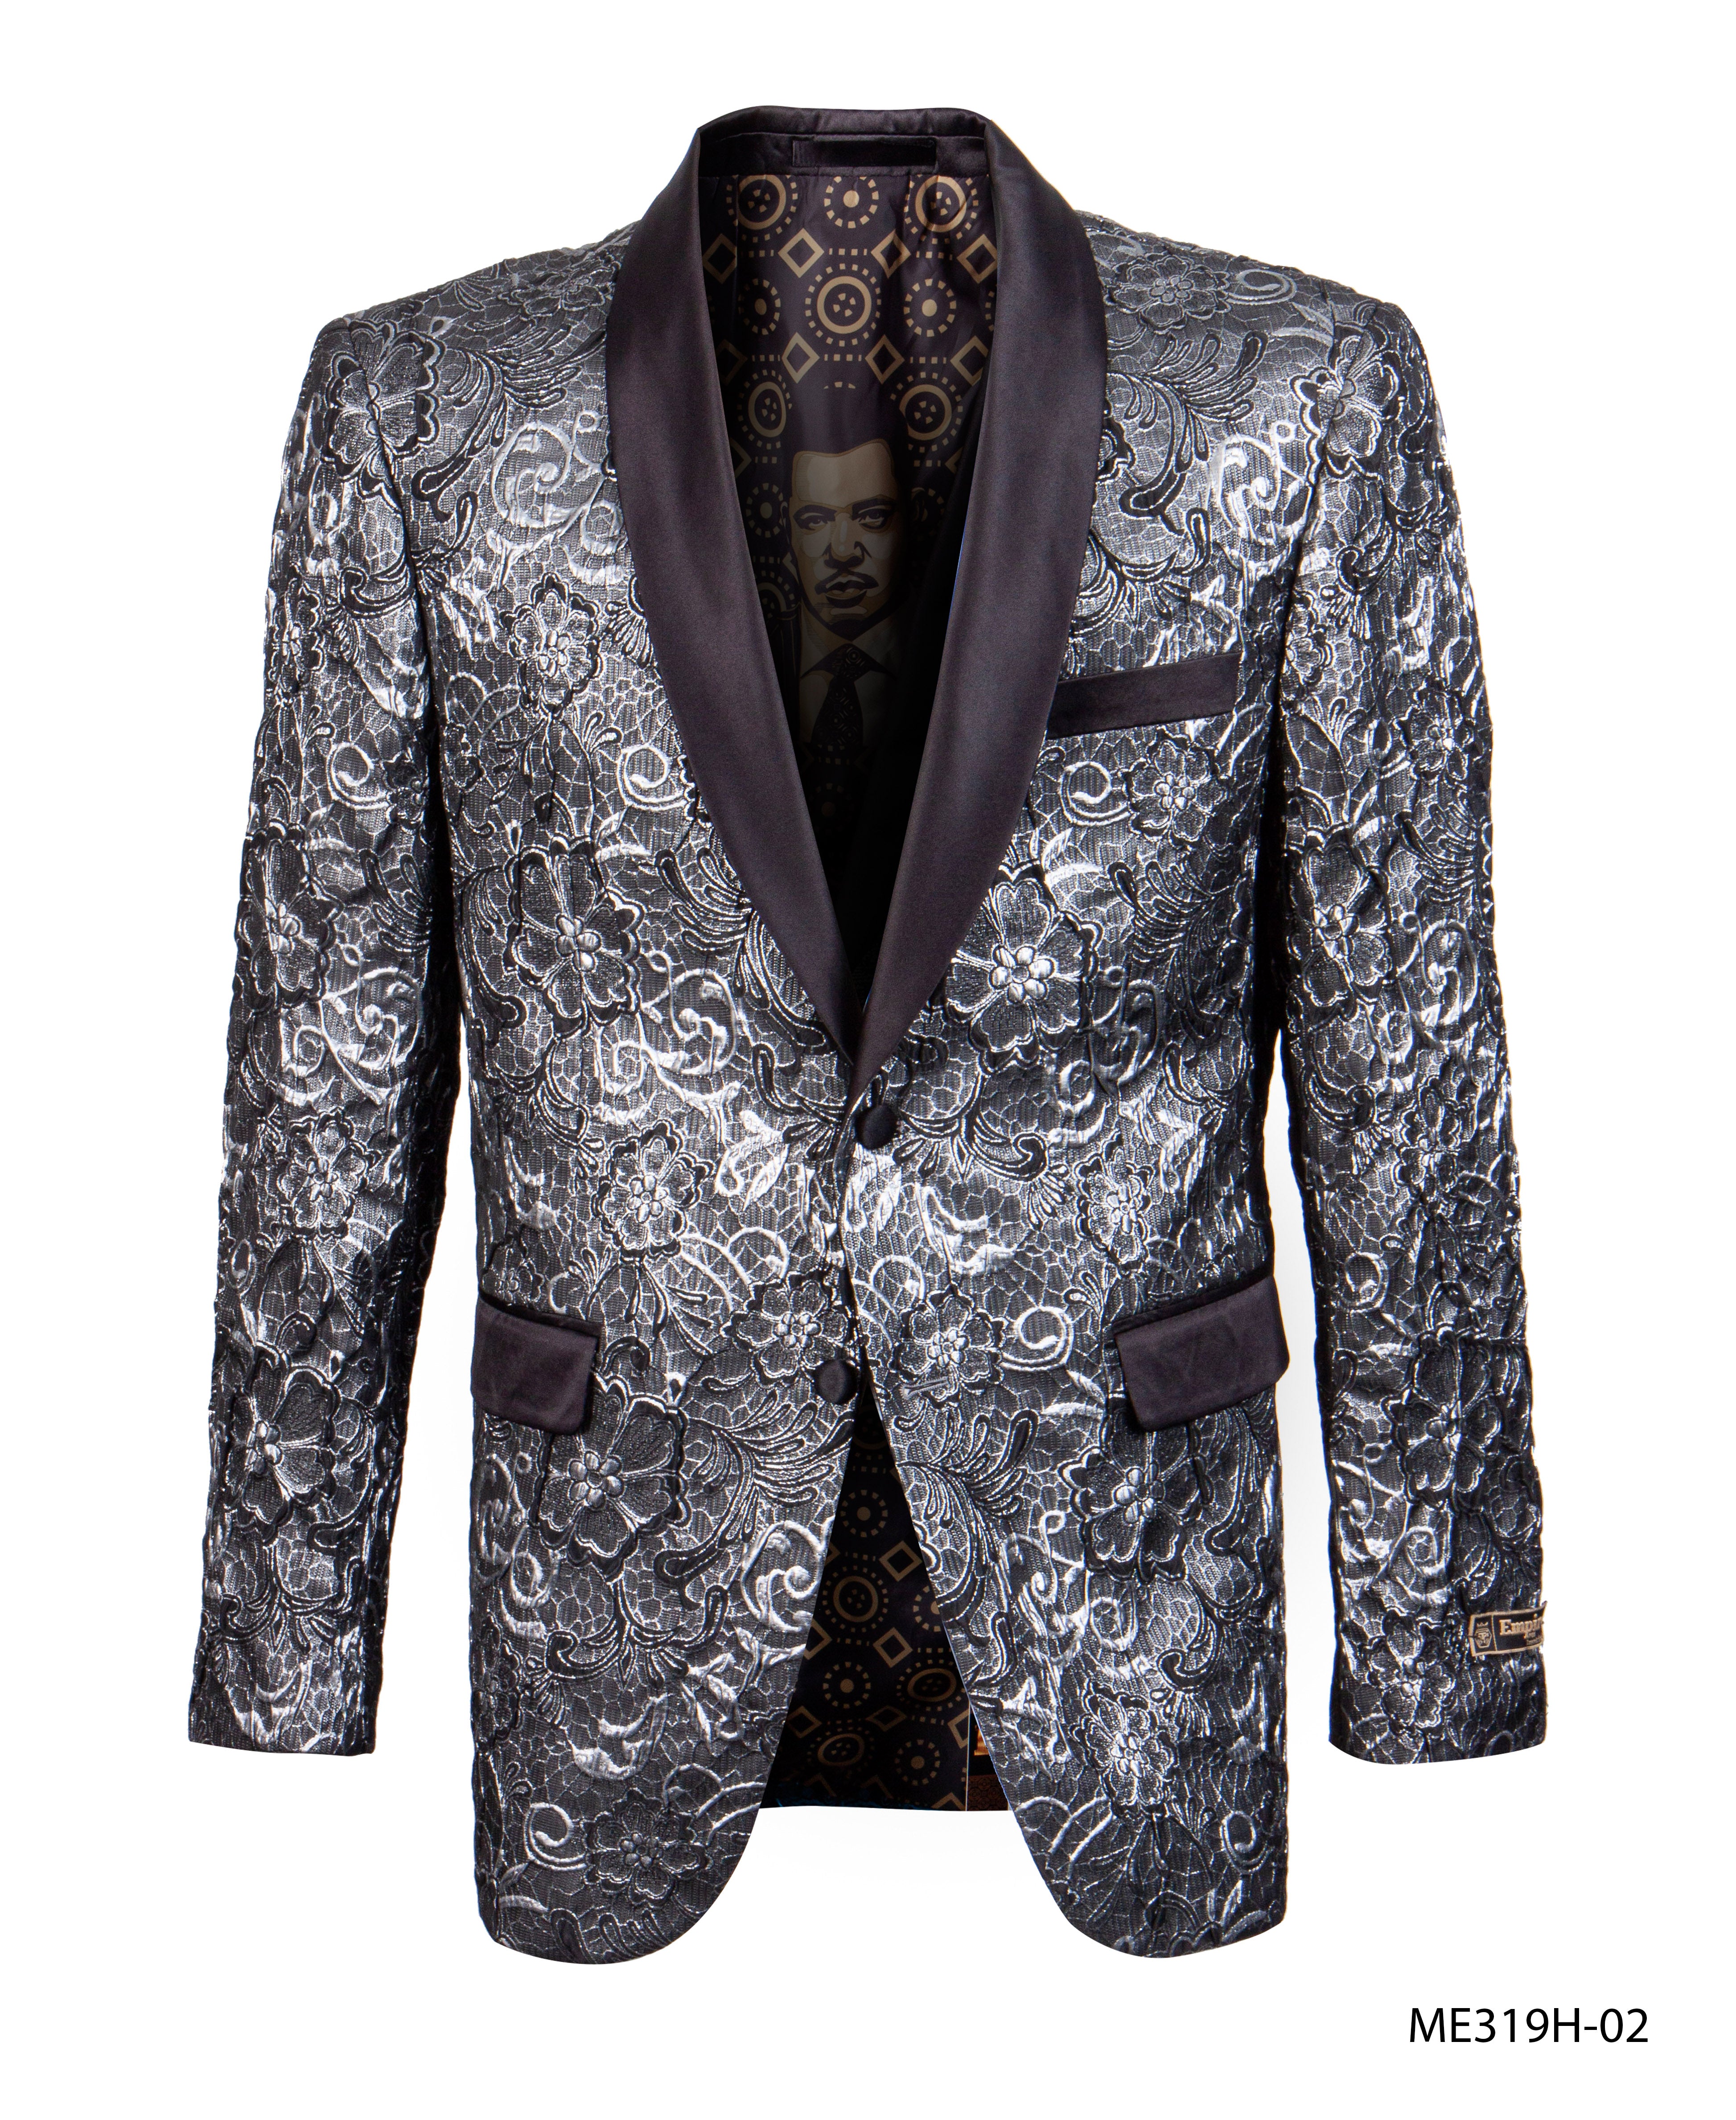 Black/Silver Empire Show Blazers Formal Dinner Suit Jackets For Men ME319H-02